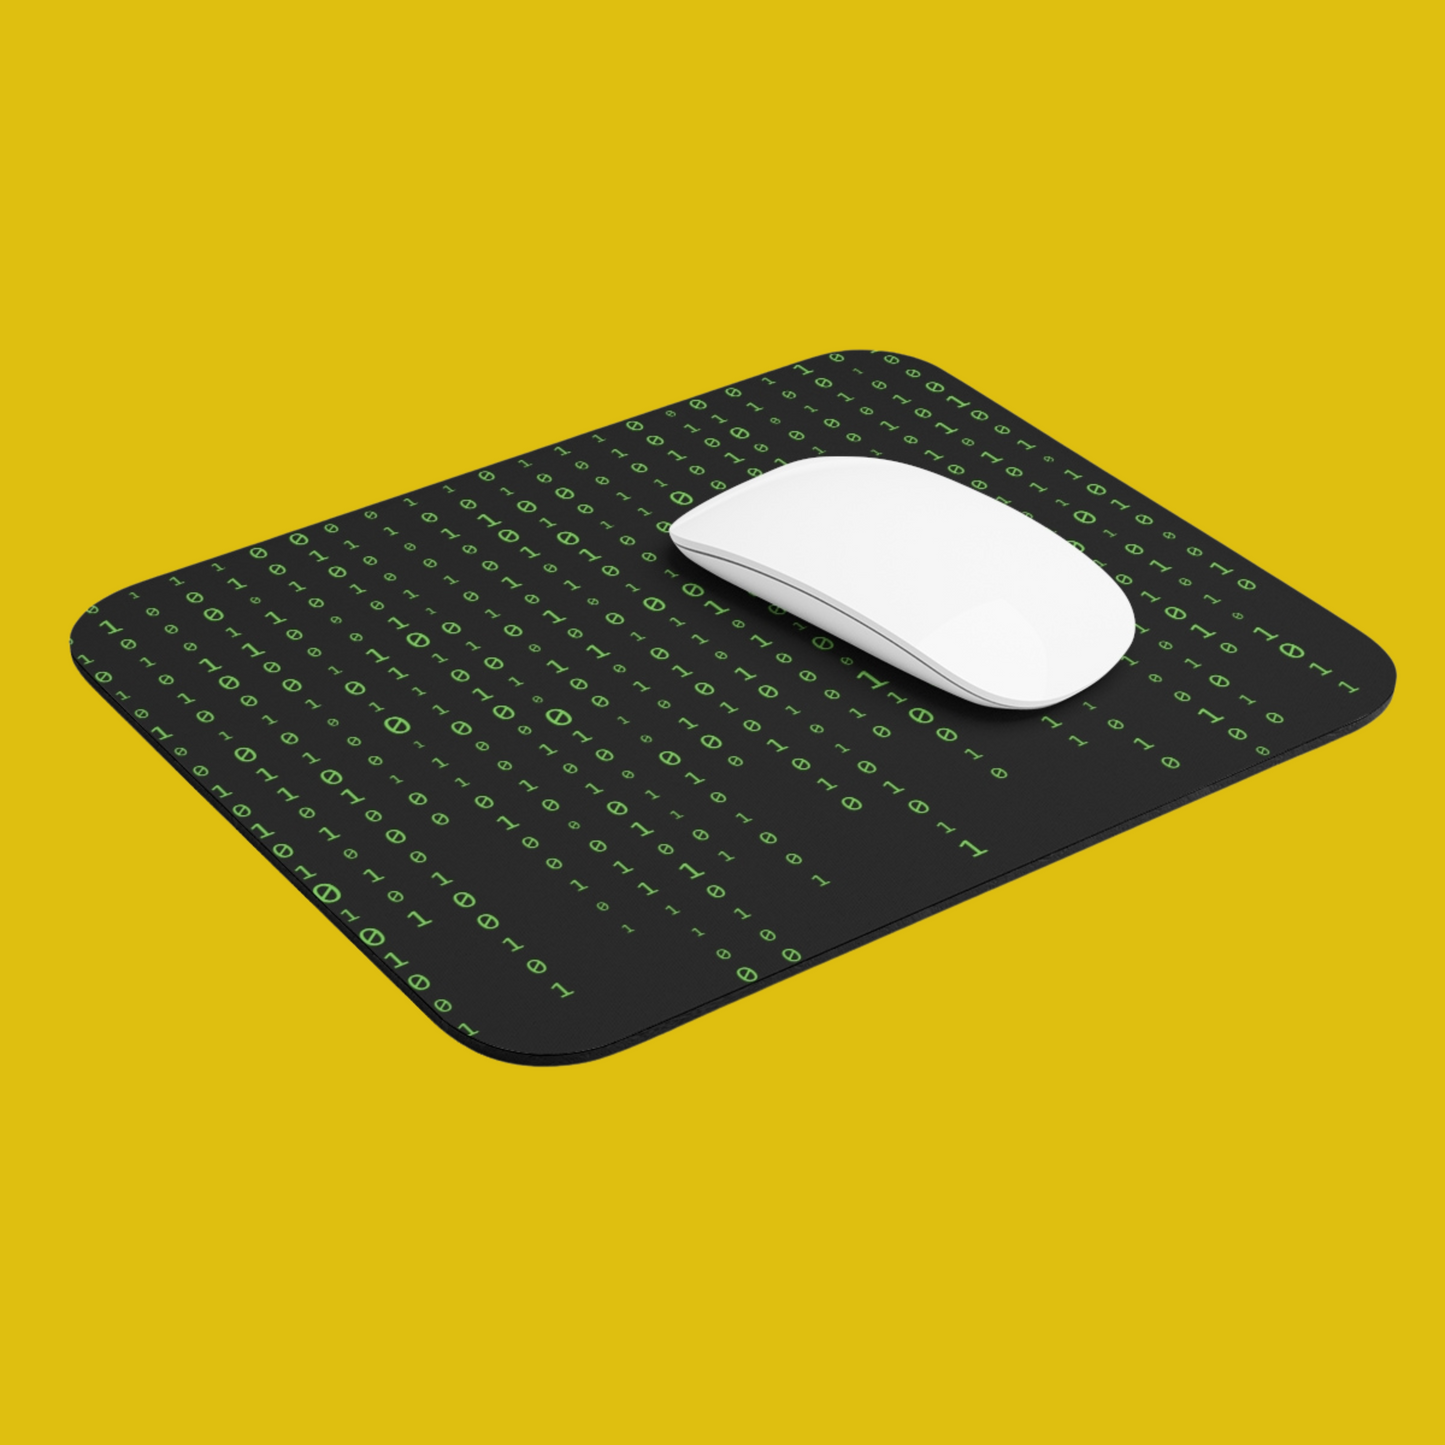 Binary Matrix Mouse pad - Developer / Programmer / Coder / Software Engineer / DevOps